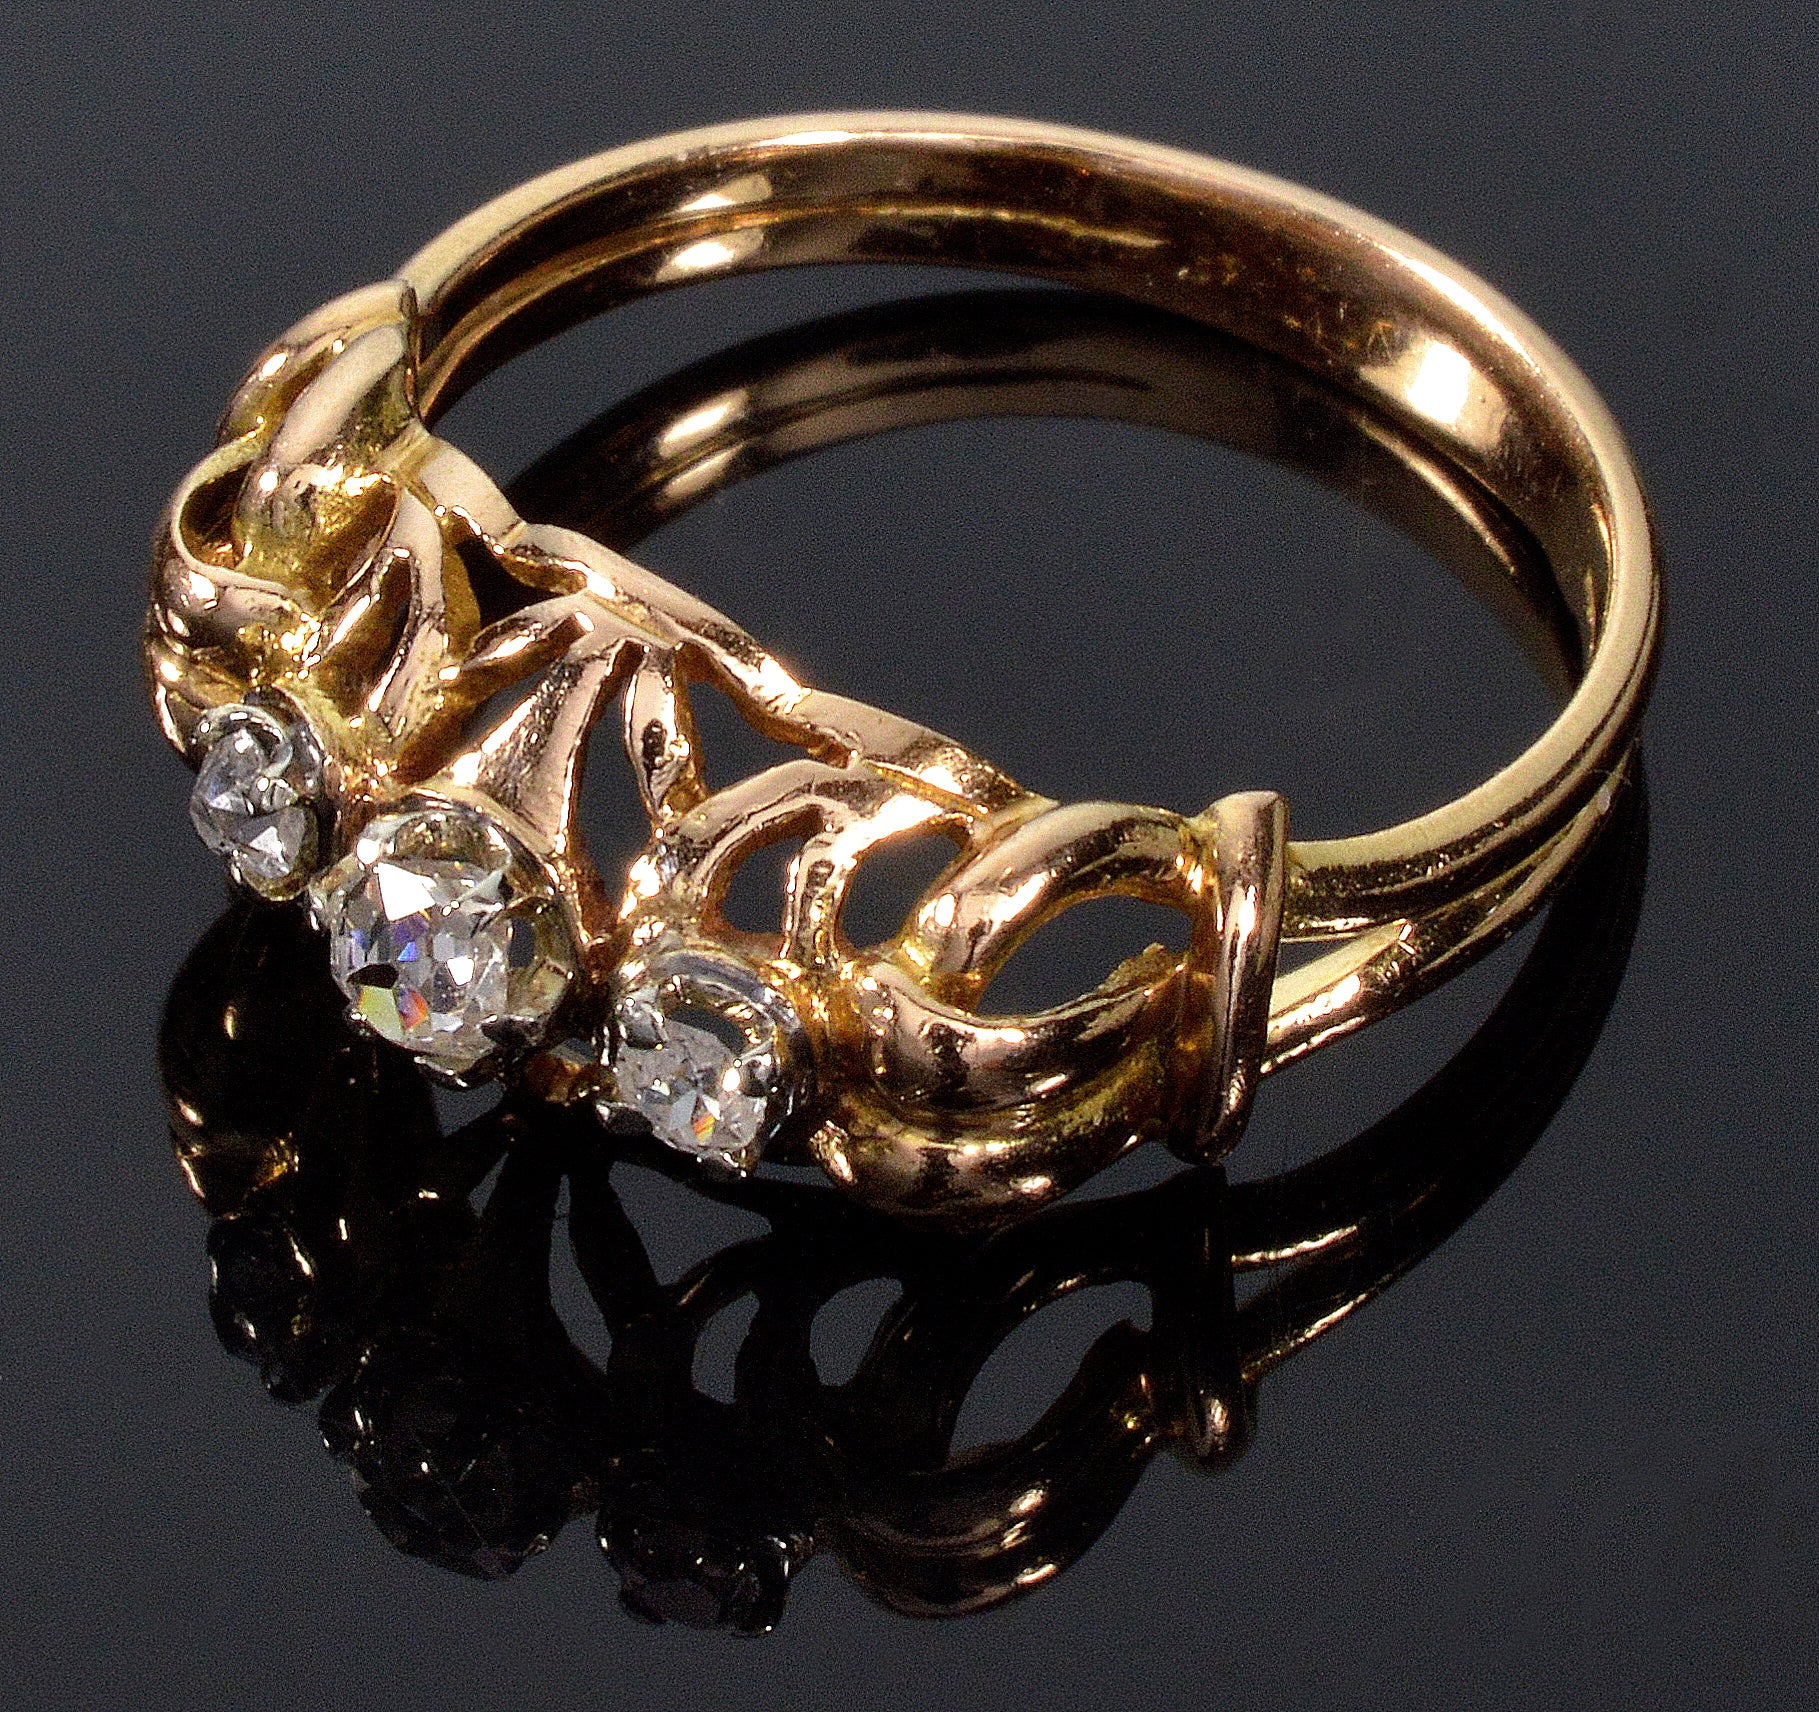 Antique Victorian French 18K Gold Ring Old Mine Cut Diamonds Eagle Hallmark C.1890